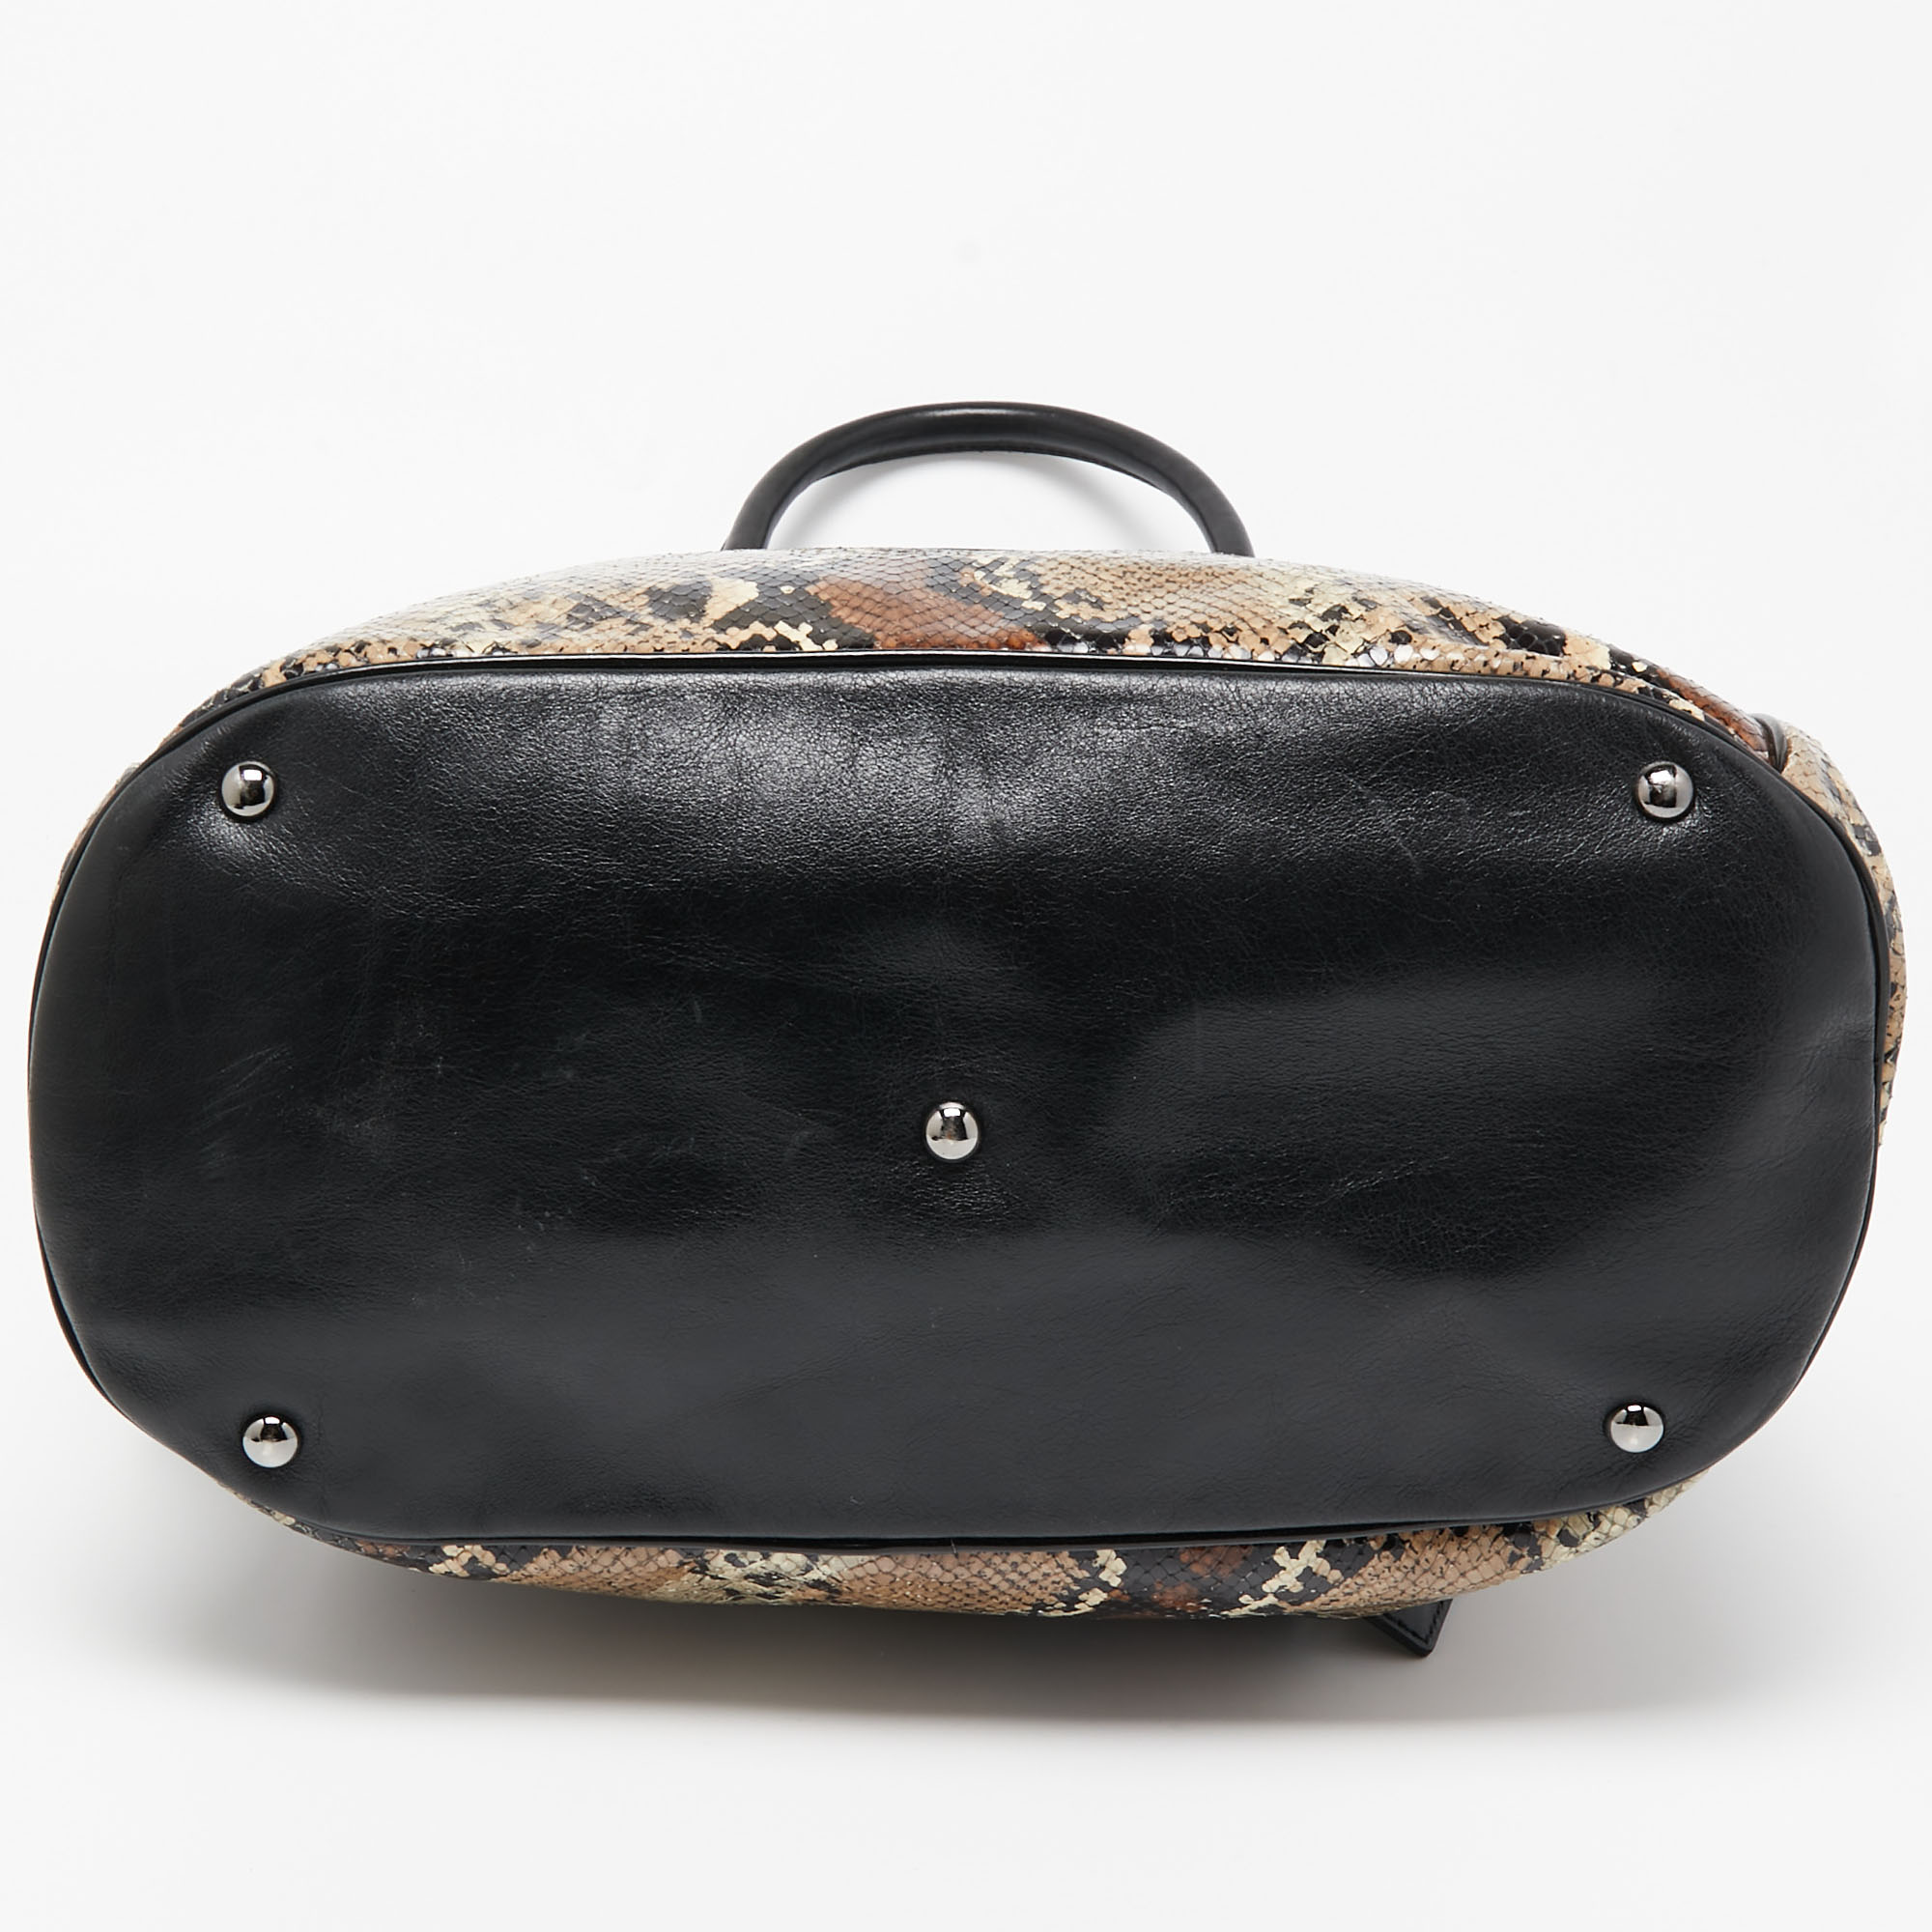 Longchamp Black/Beige Python Embossed Leather Cosmo Satchel